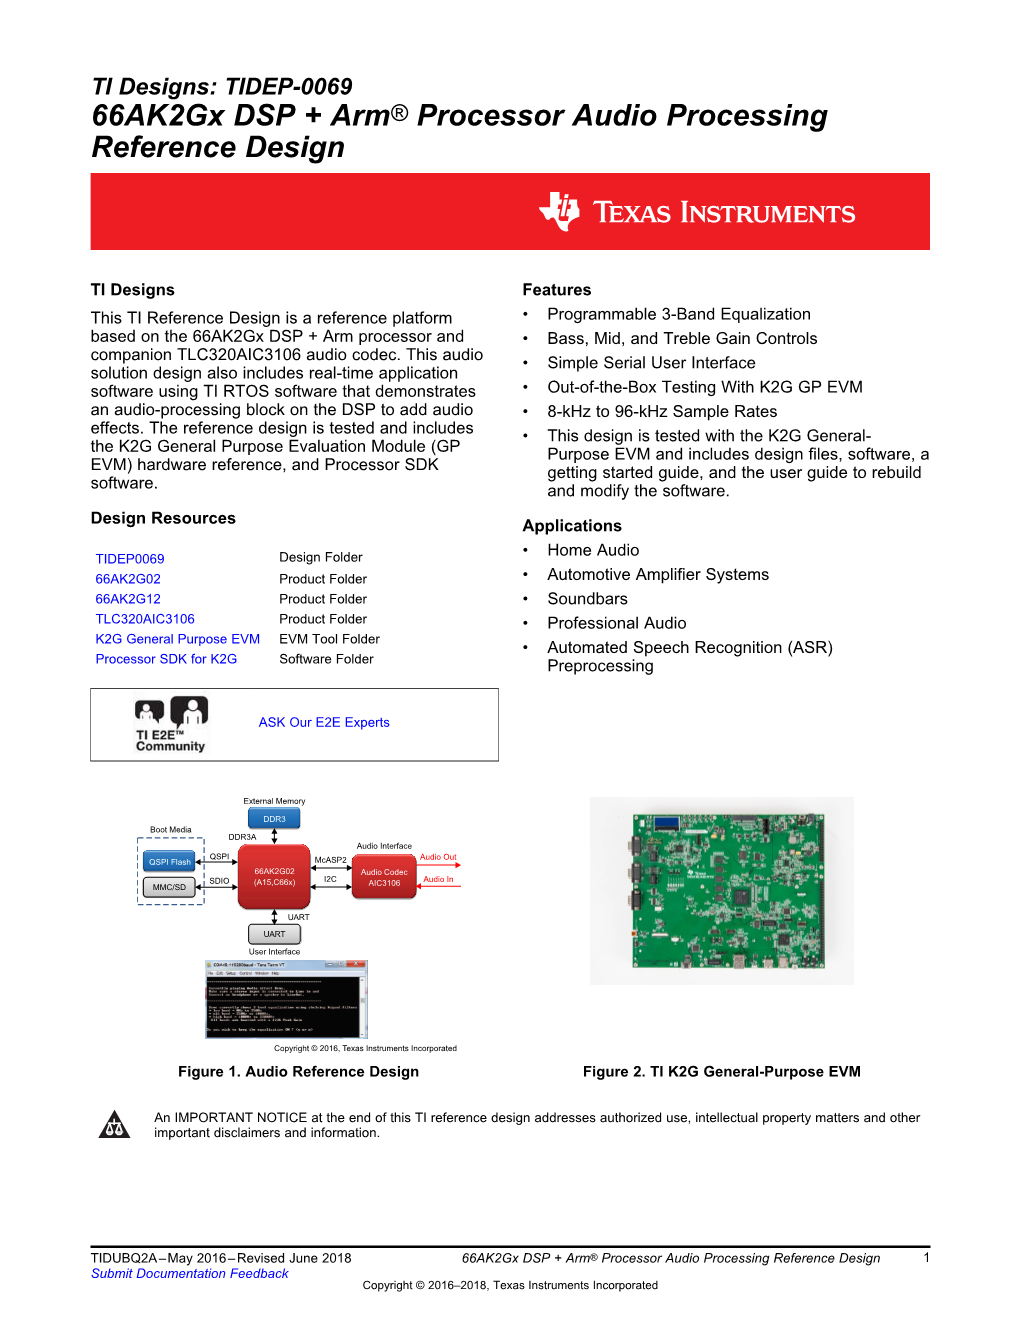 66Ak2gx DSP + Arm® Processor Audio Processing Reference Design